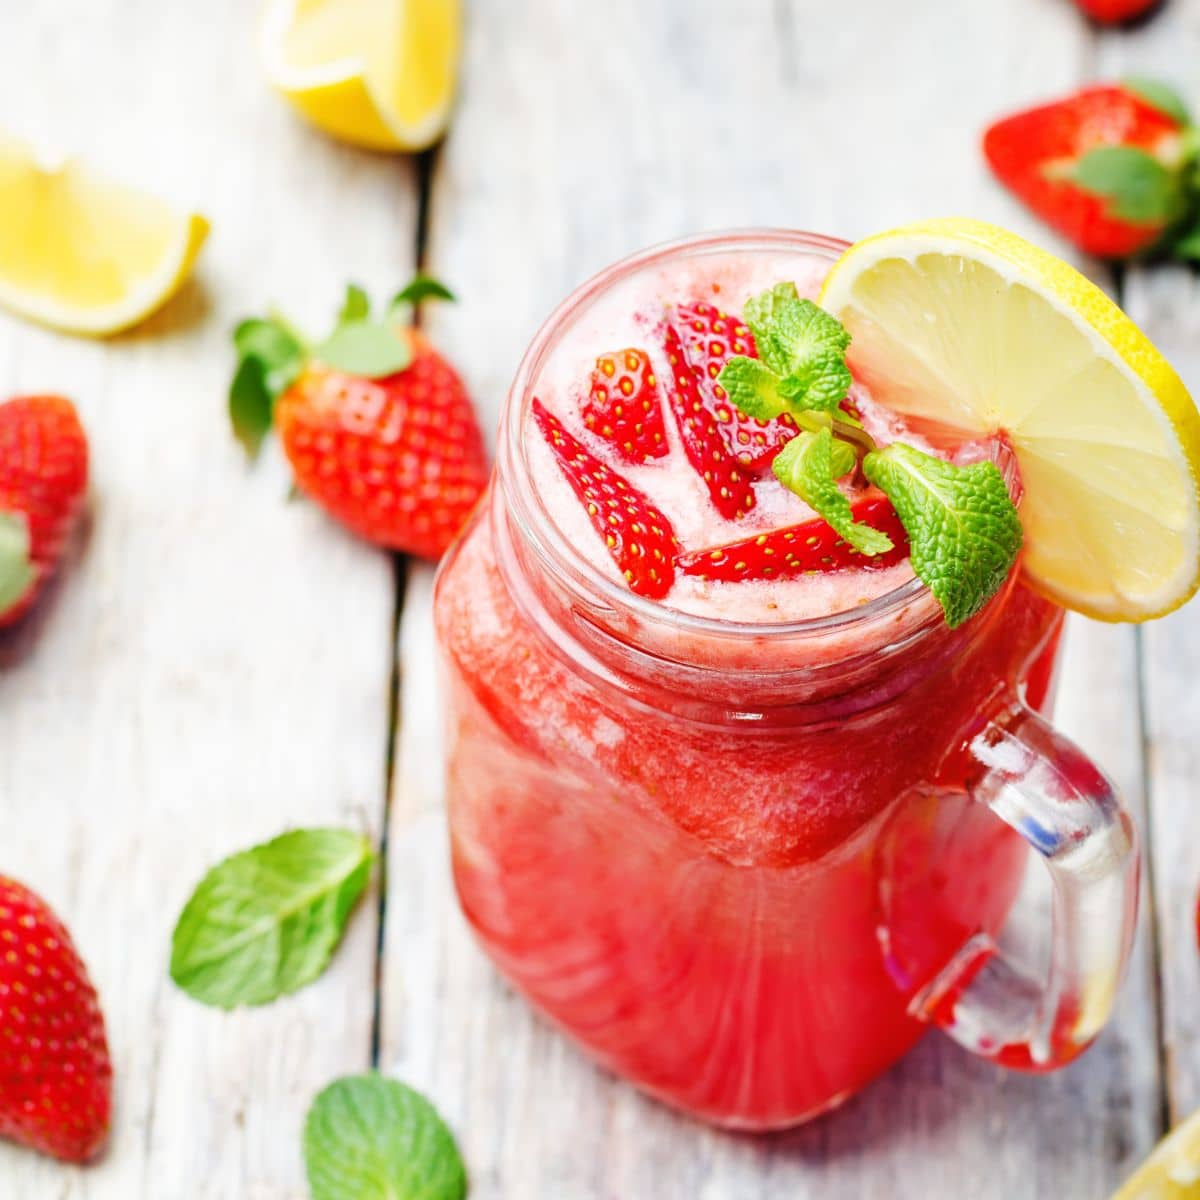 Mason jar filled with strawberrt lemonade.